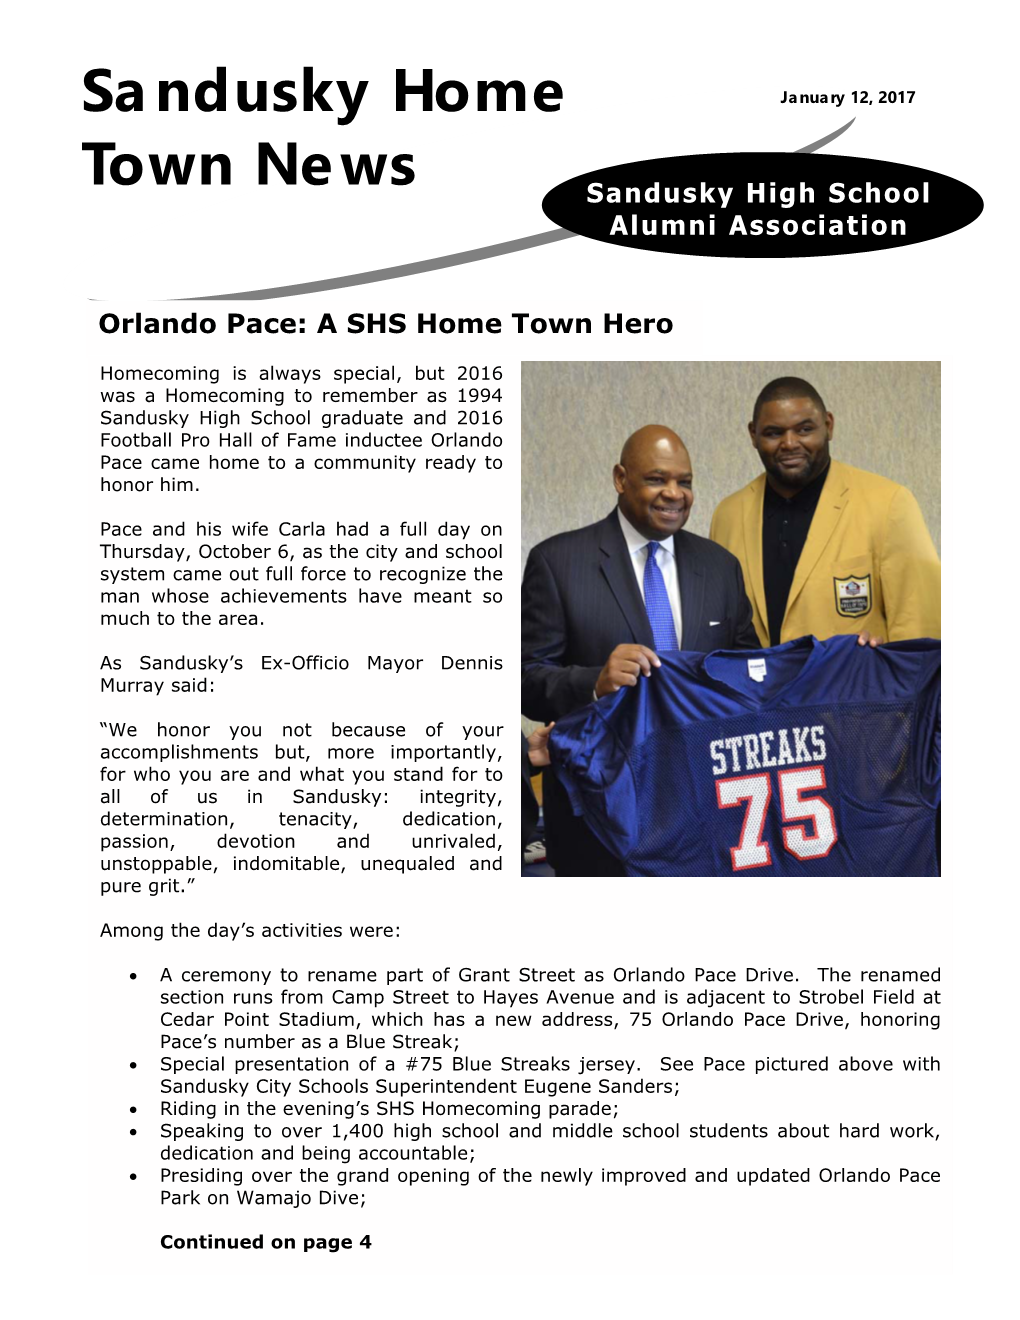 Sandusky Home Town News, the Newsletter of the Sandusky High School Alumni Association